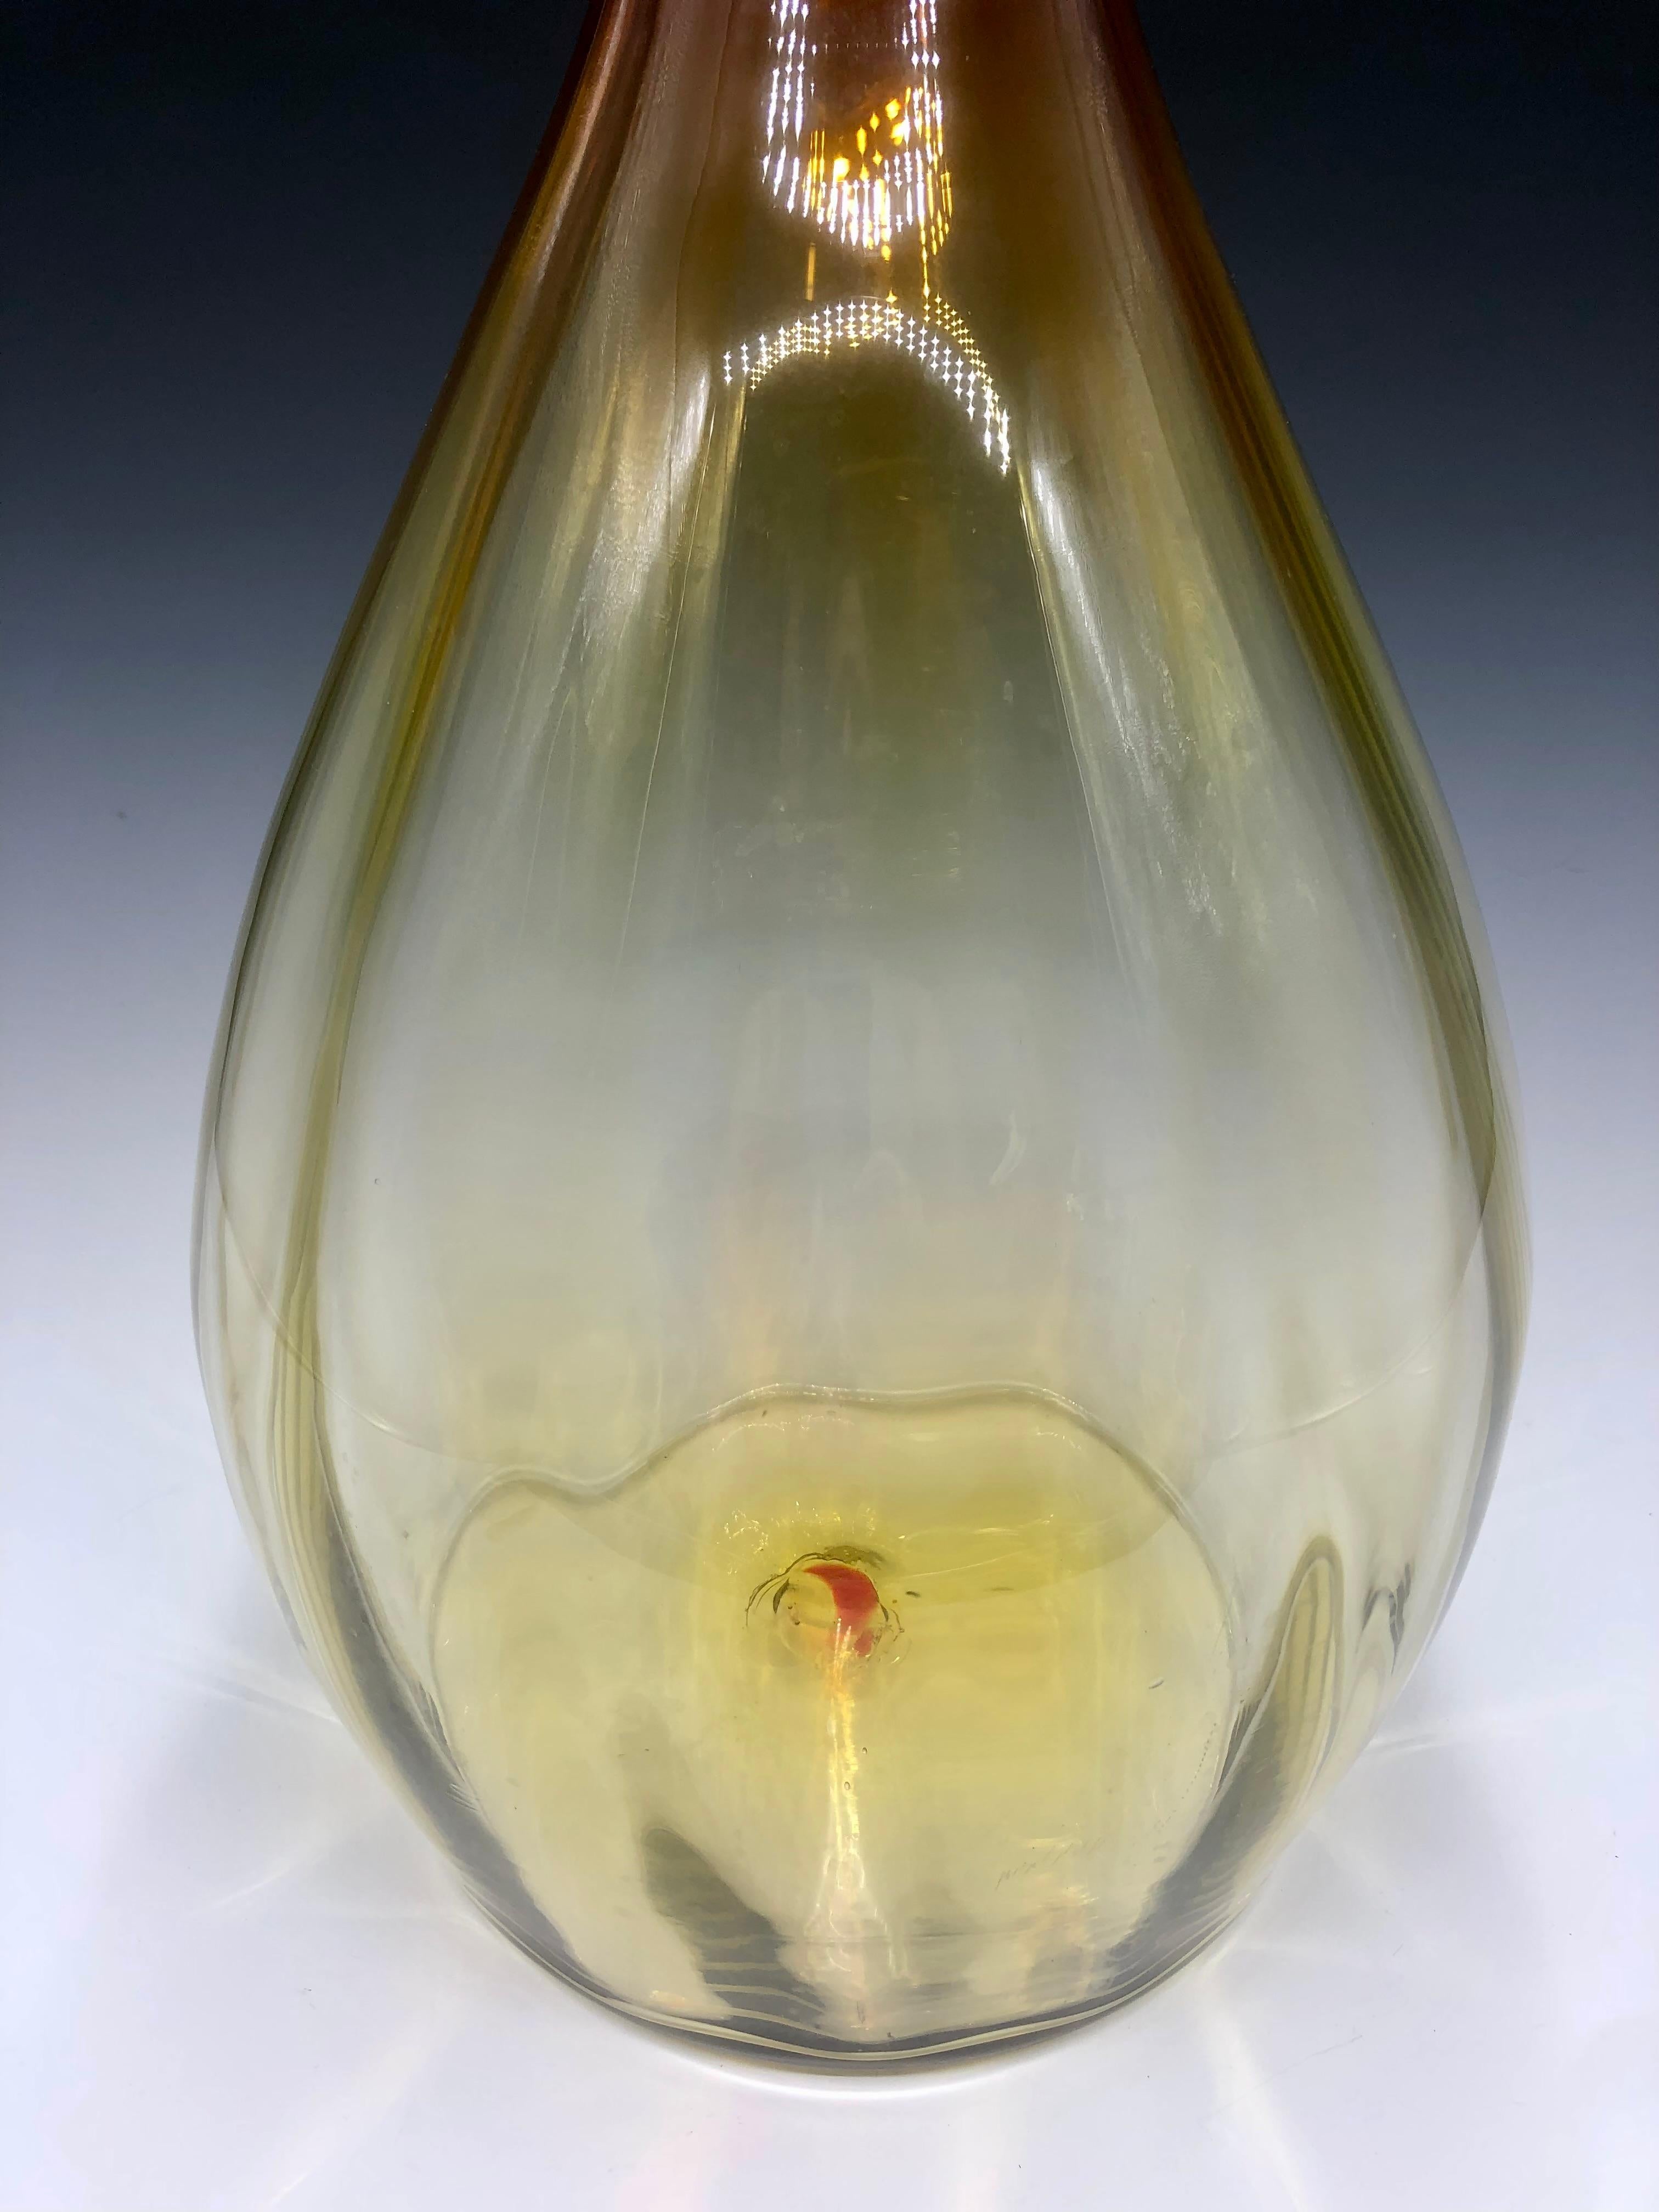 Grand vase en verre nervuré jaune rouge amberina Blenko - Moderne Sculpture par Blenko Glass